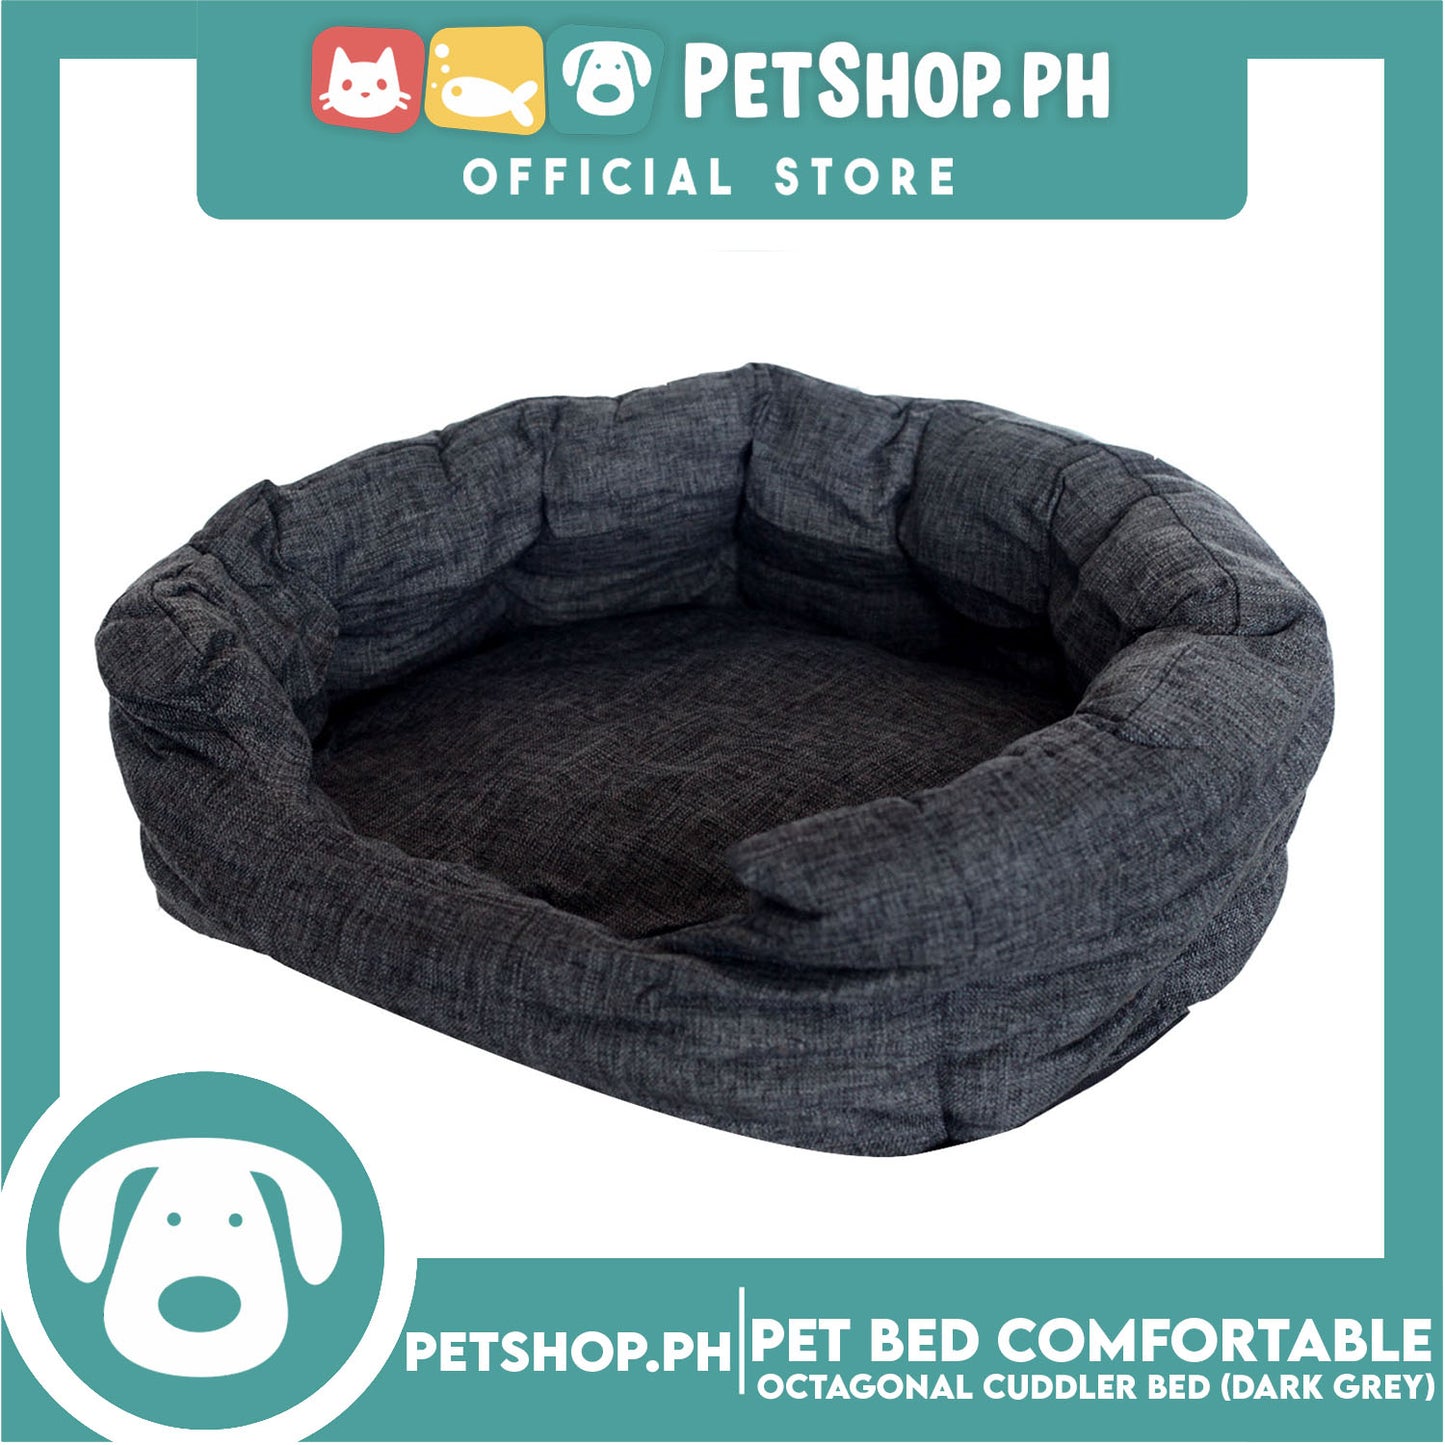 Pet Bed Comfortable Octagonal Cuddler Dog Bed 55x47x18cm Medium for Dogs & Cats (Dark Gray)